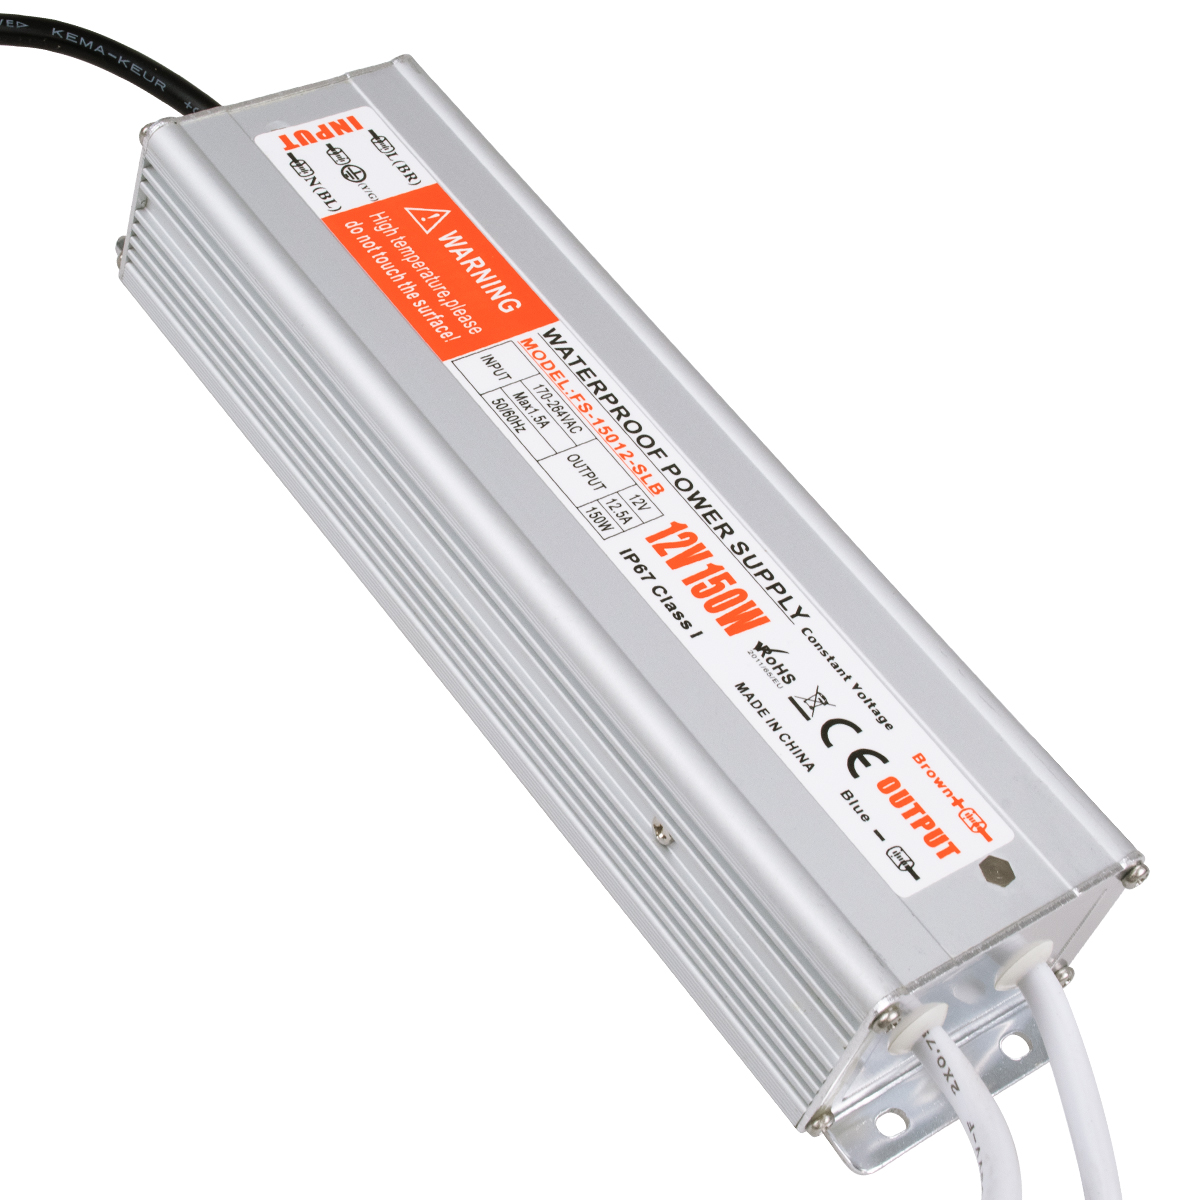 GloboStar® 73053 Μεταλλικό Τροφοδοτικό SELV για Προϊόντα LED 150W 12.5A – AC 220-240V σε DC 12V – Αδιάβροχο IP67 L24.3 x W7.4 x H4.5cm – 3 Χρόνια Εγγύηση